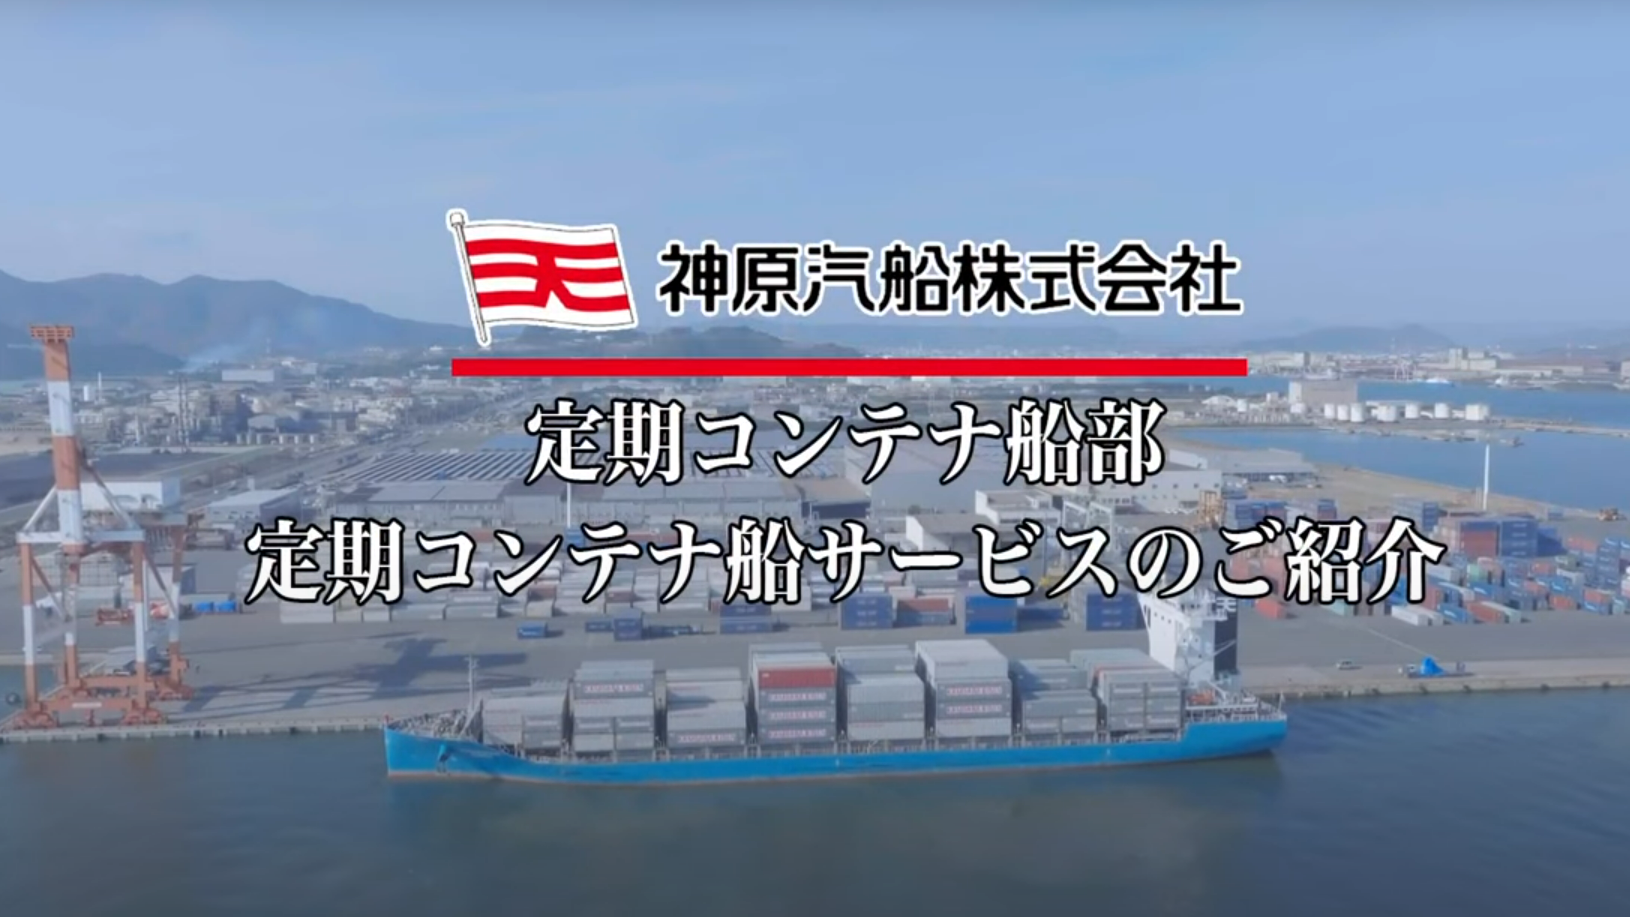 『SHIP』の新たな可能性をカタチにする ～神原汽船定期コンテナ船サービスのご紹介動画公開のお知らせ～